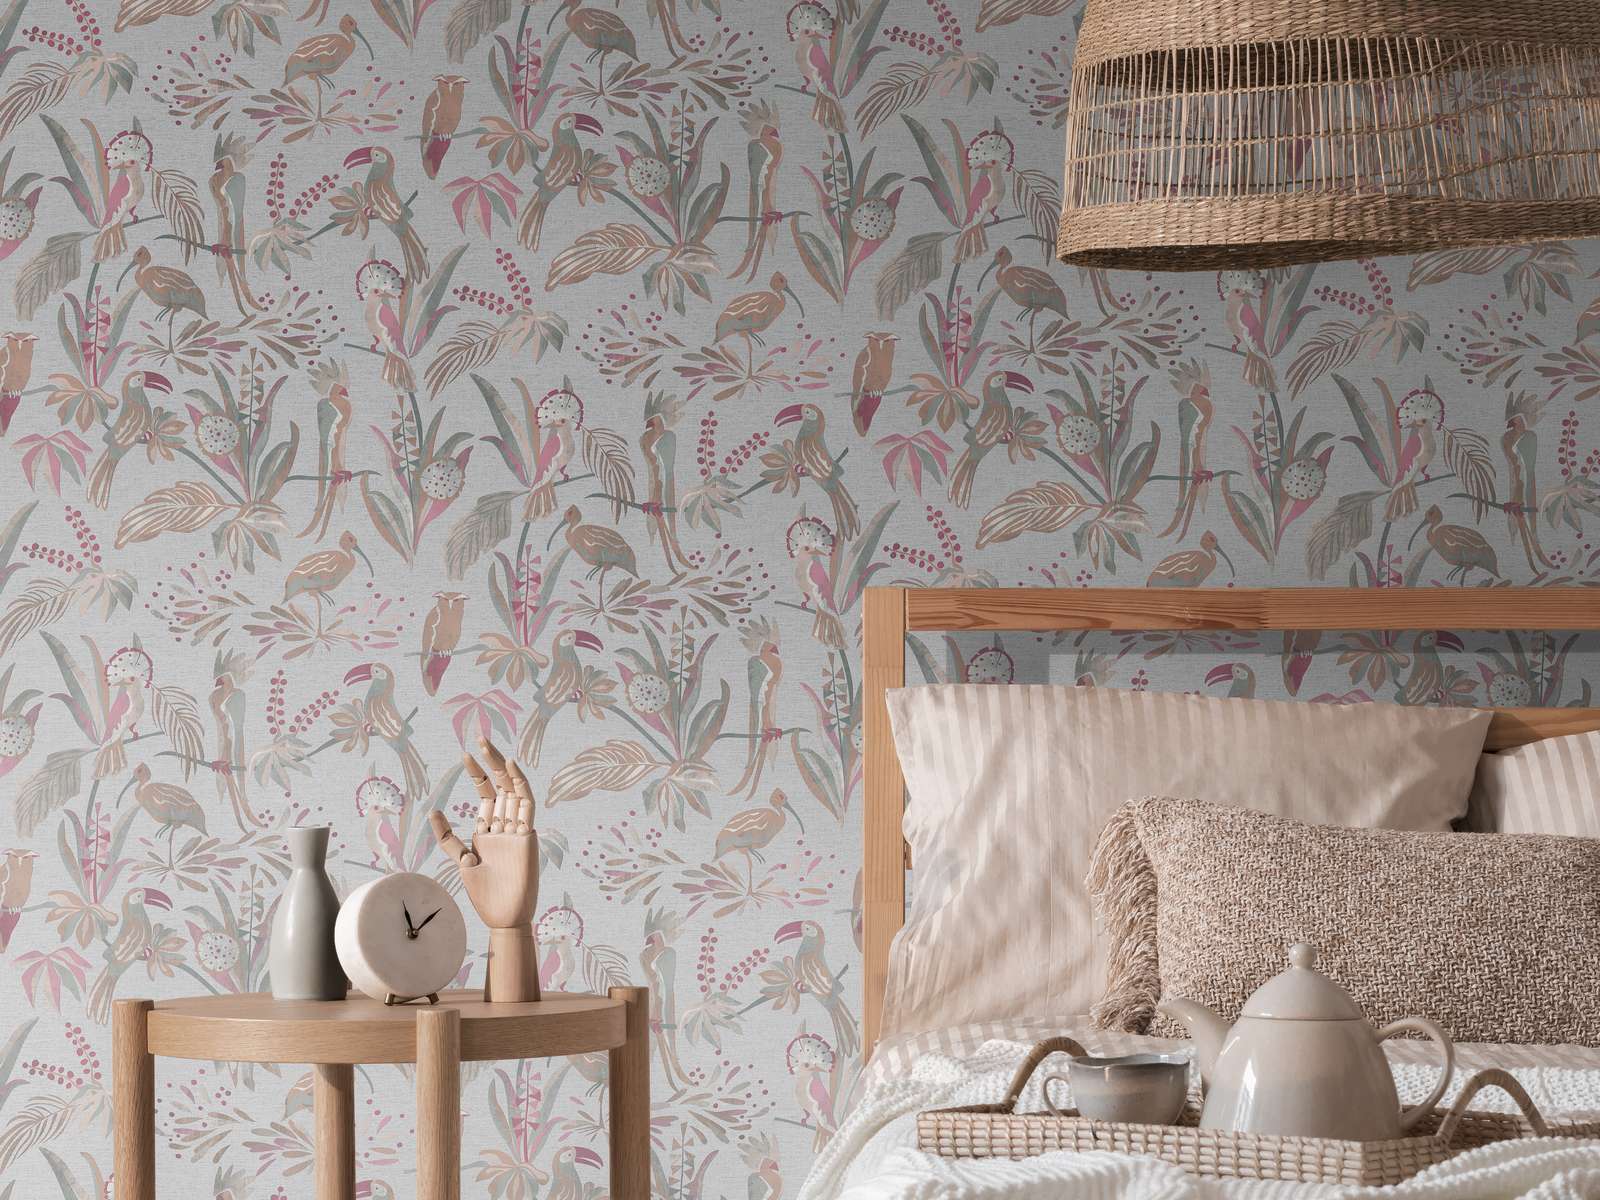             Wallpaper with tropical plants & birds in linen look - grey, brown, red
        